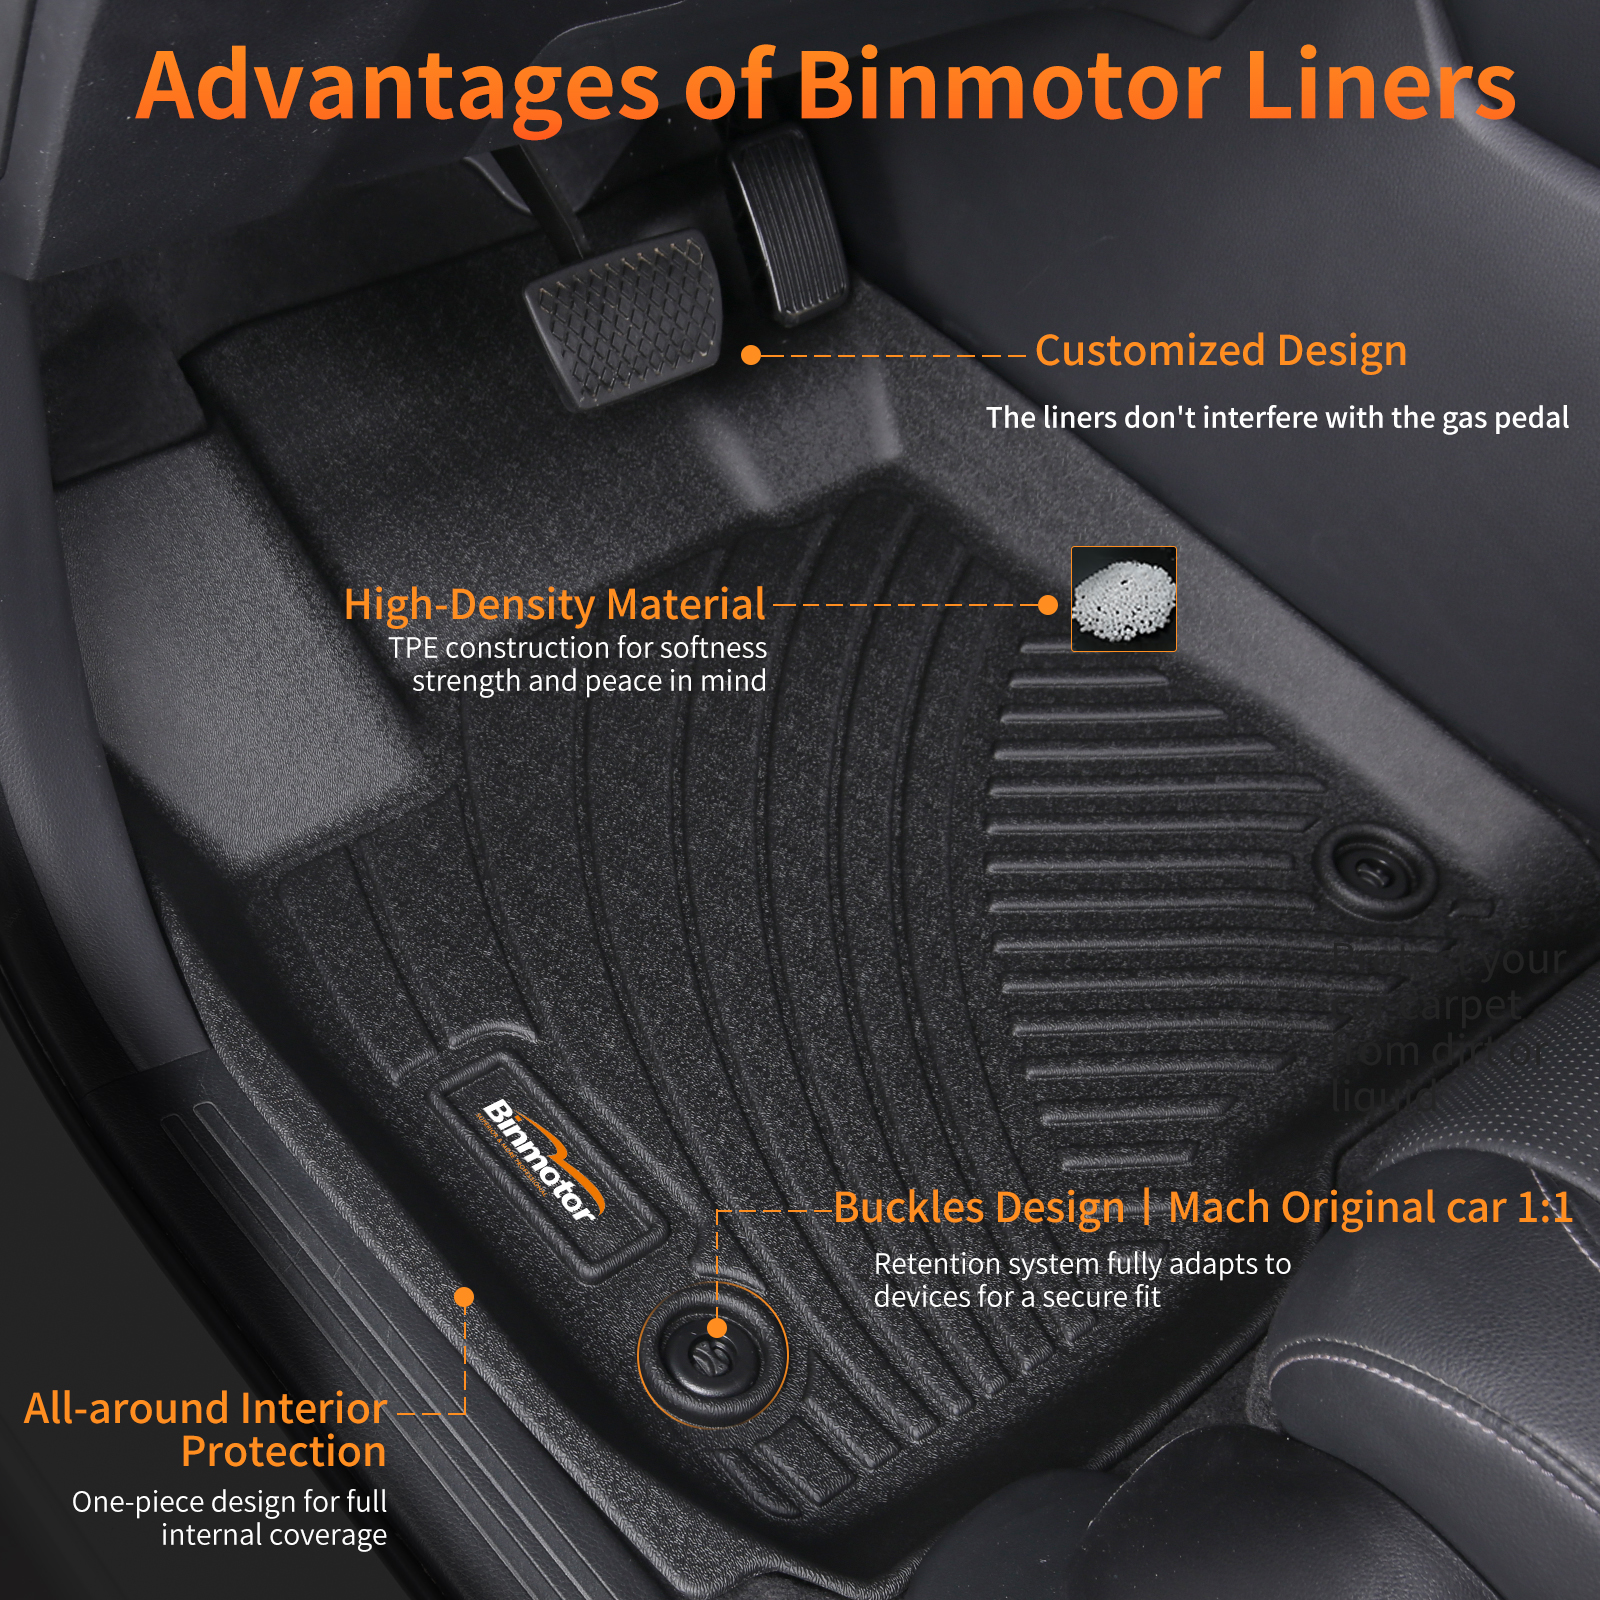 Binmotor-Floor Mats & Cargo Liner for Chevy/Chevrolet Trax丨 LS丨ACTIV丨LT丨1RS丨2RS（compatible year 2024）